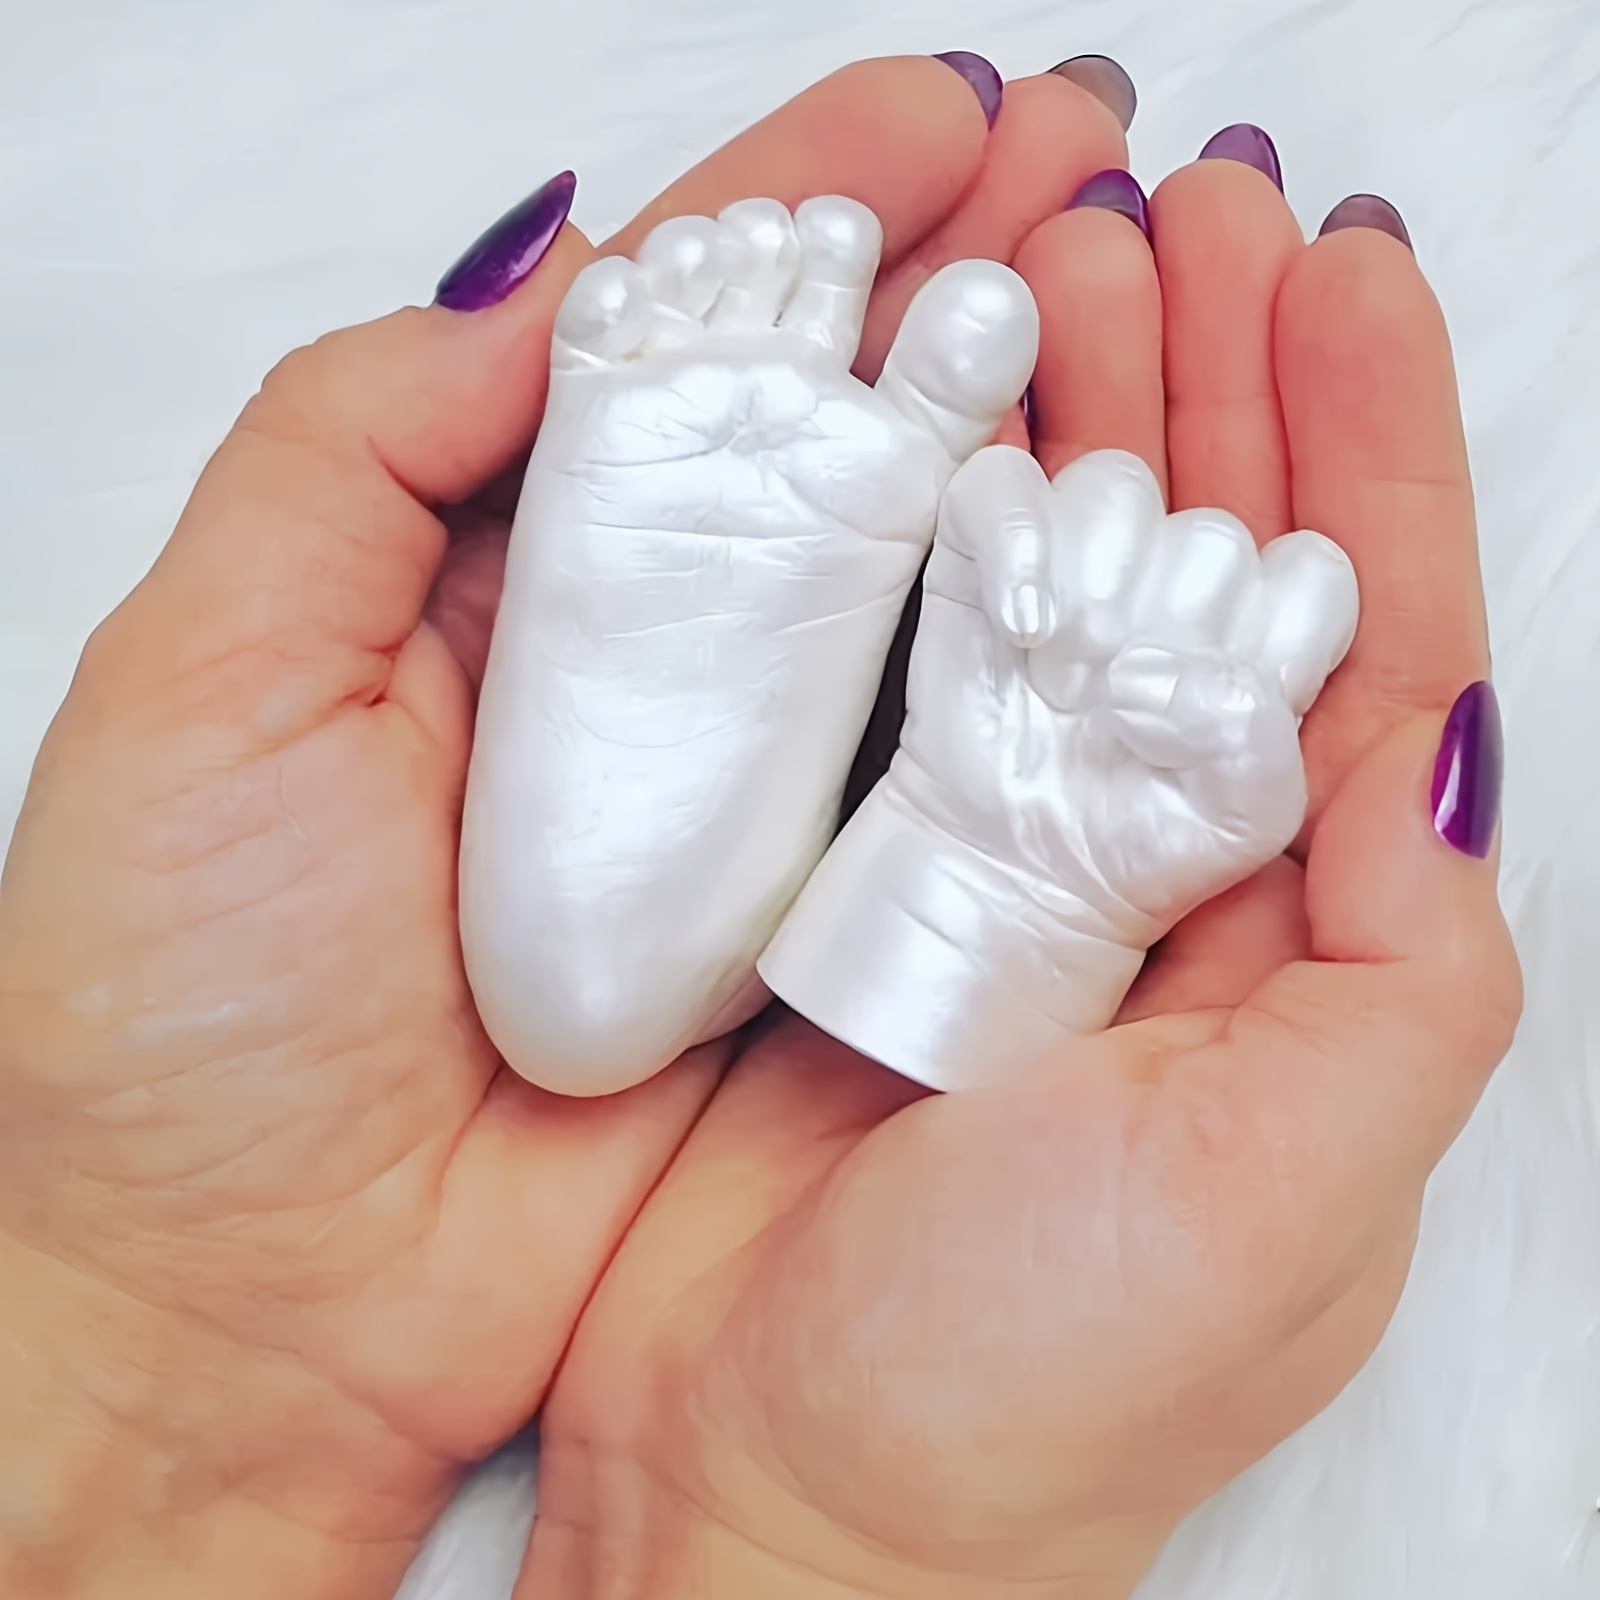 Baby Keepsake DIY Hand Casting Kit 3D Hand Print Powder Statue Molding Kit